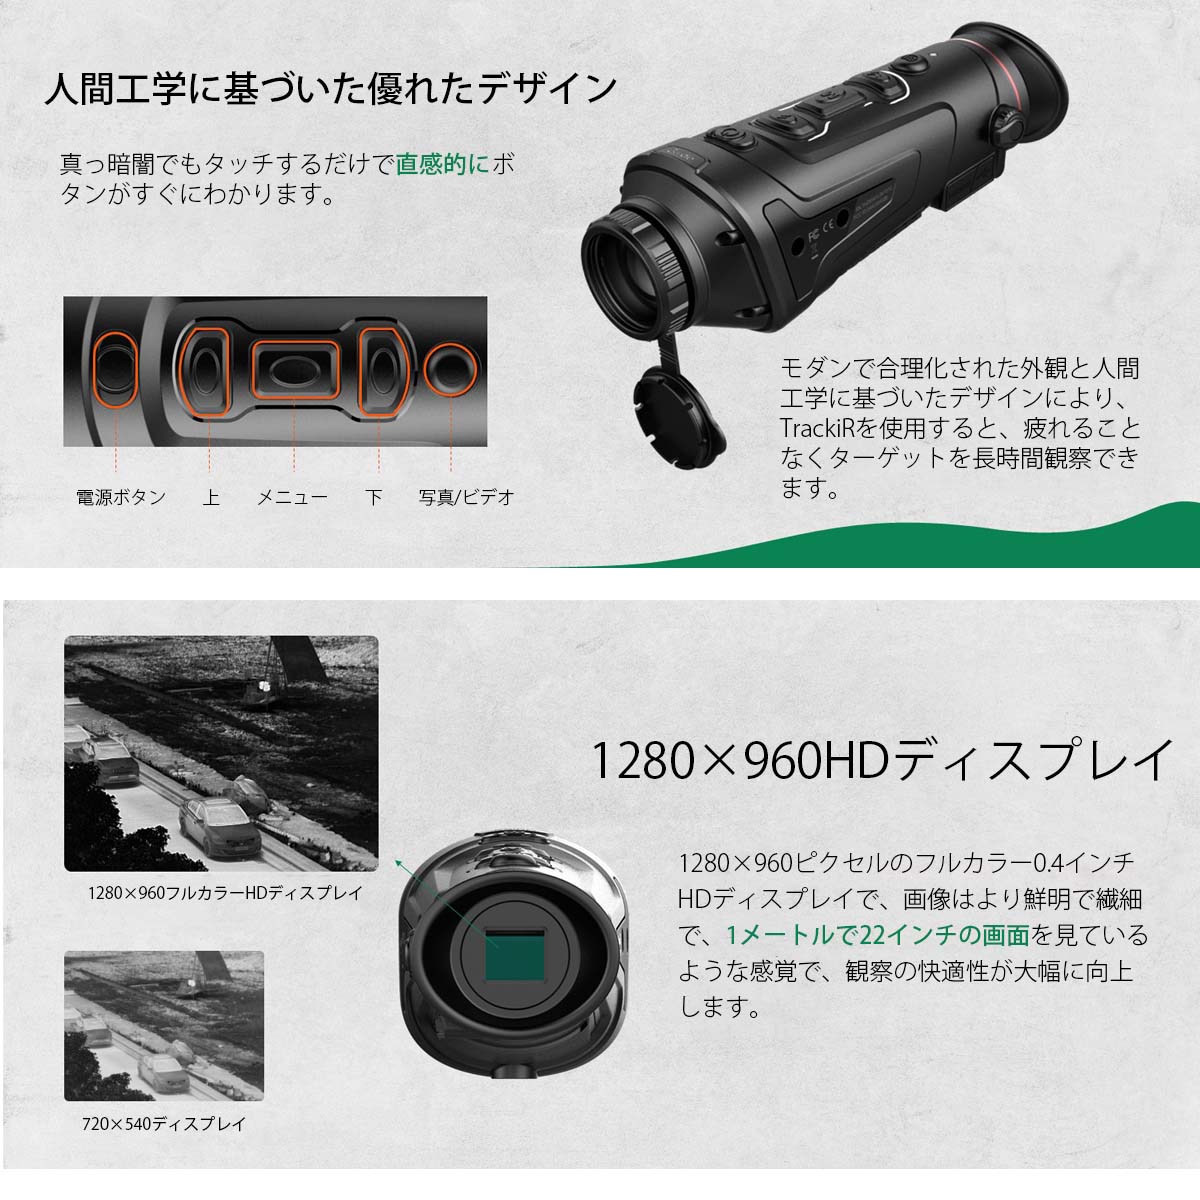 Guide sensmart ハンドヘルド熱画像単眼鏡 TrackIR-50mm（TrackIRシリーズ） 光学機器,暗視スコープ  タイムテクノロジー公式ショップ